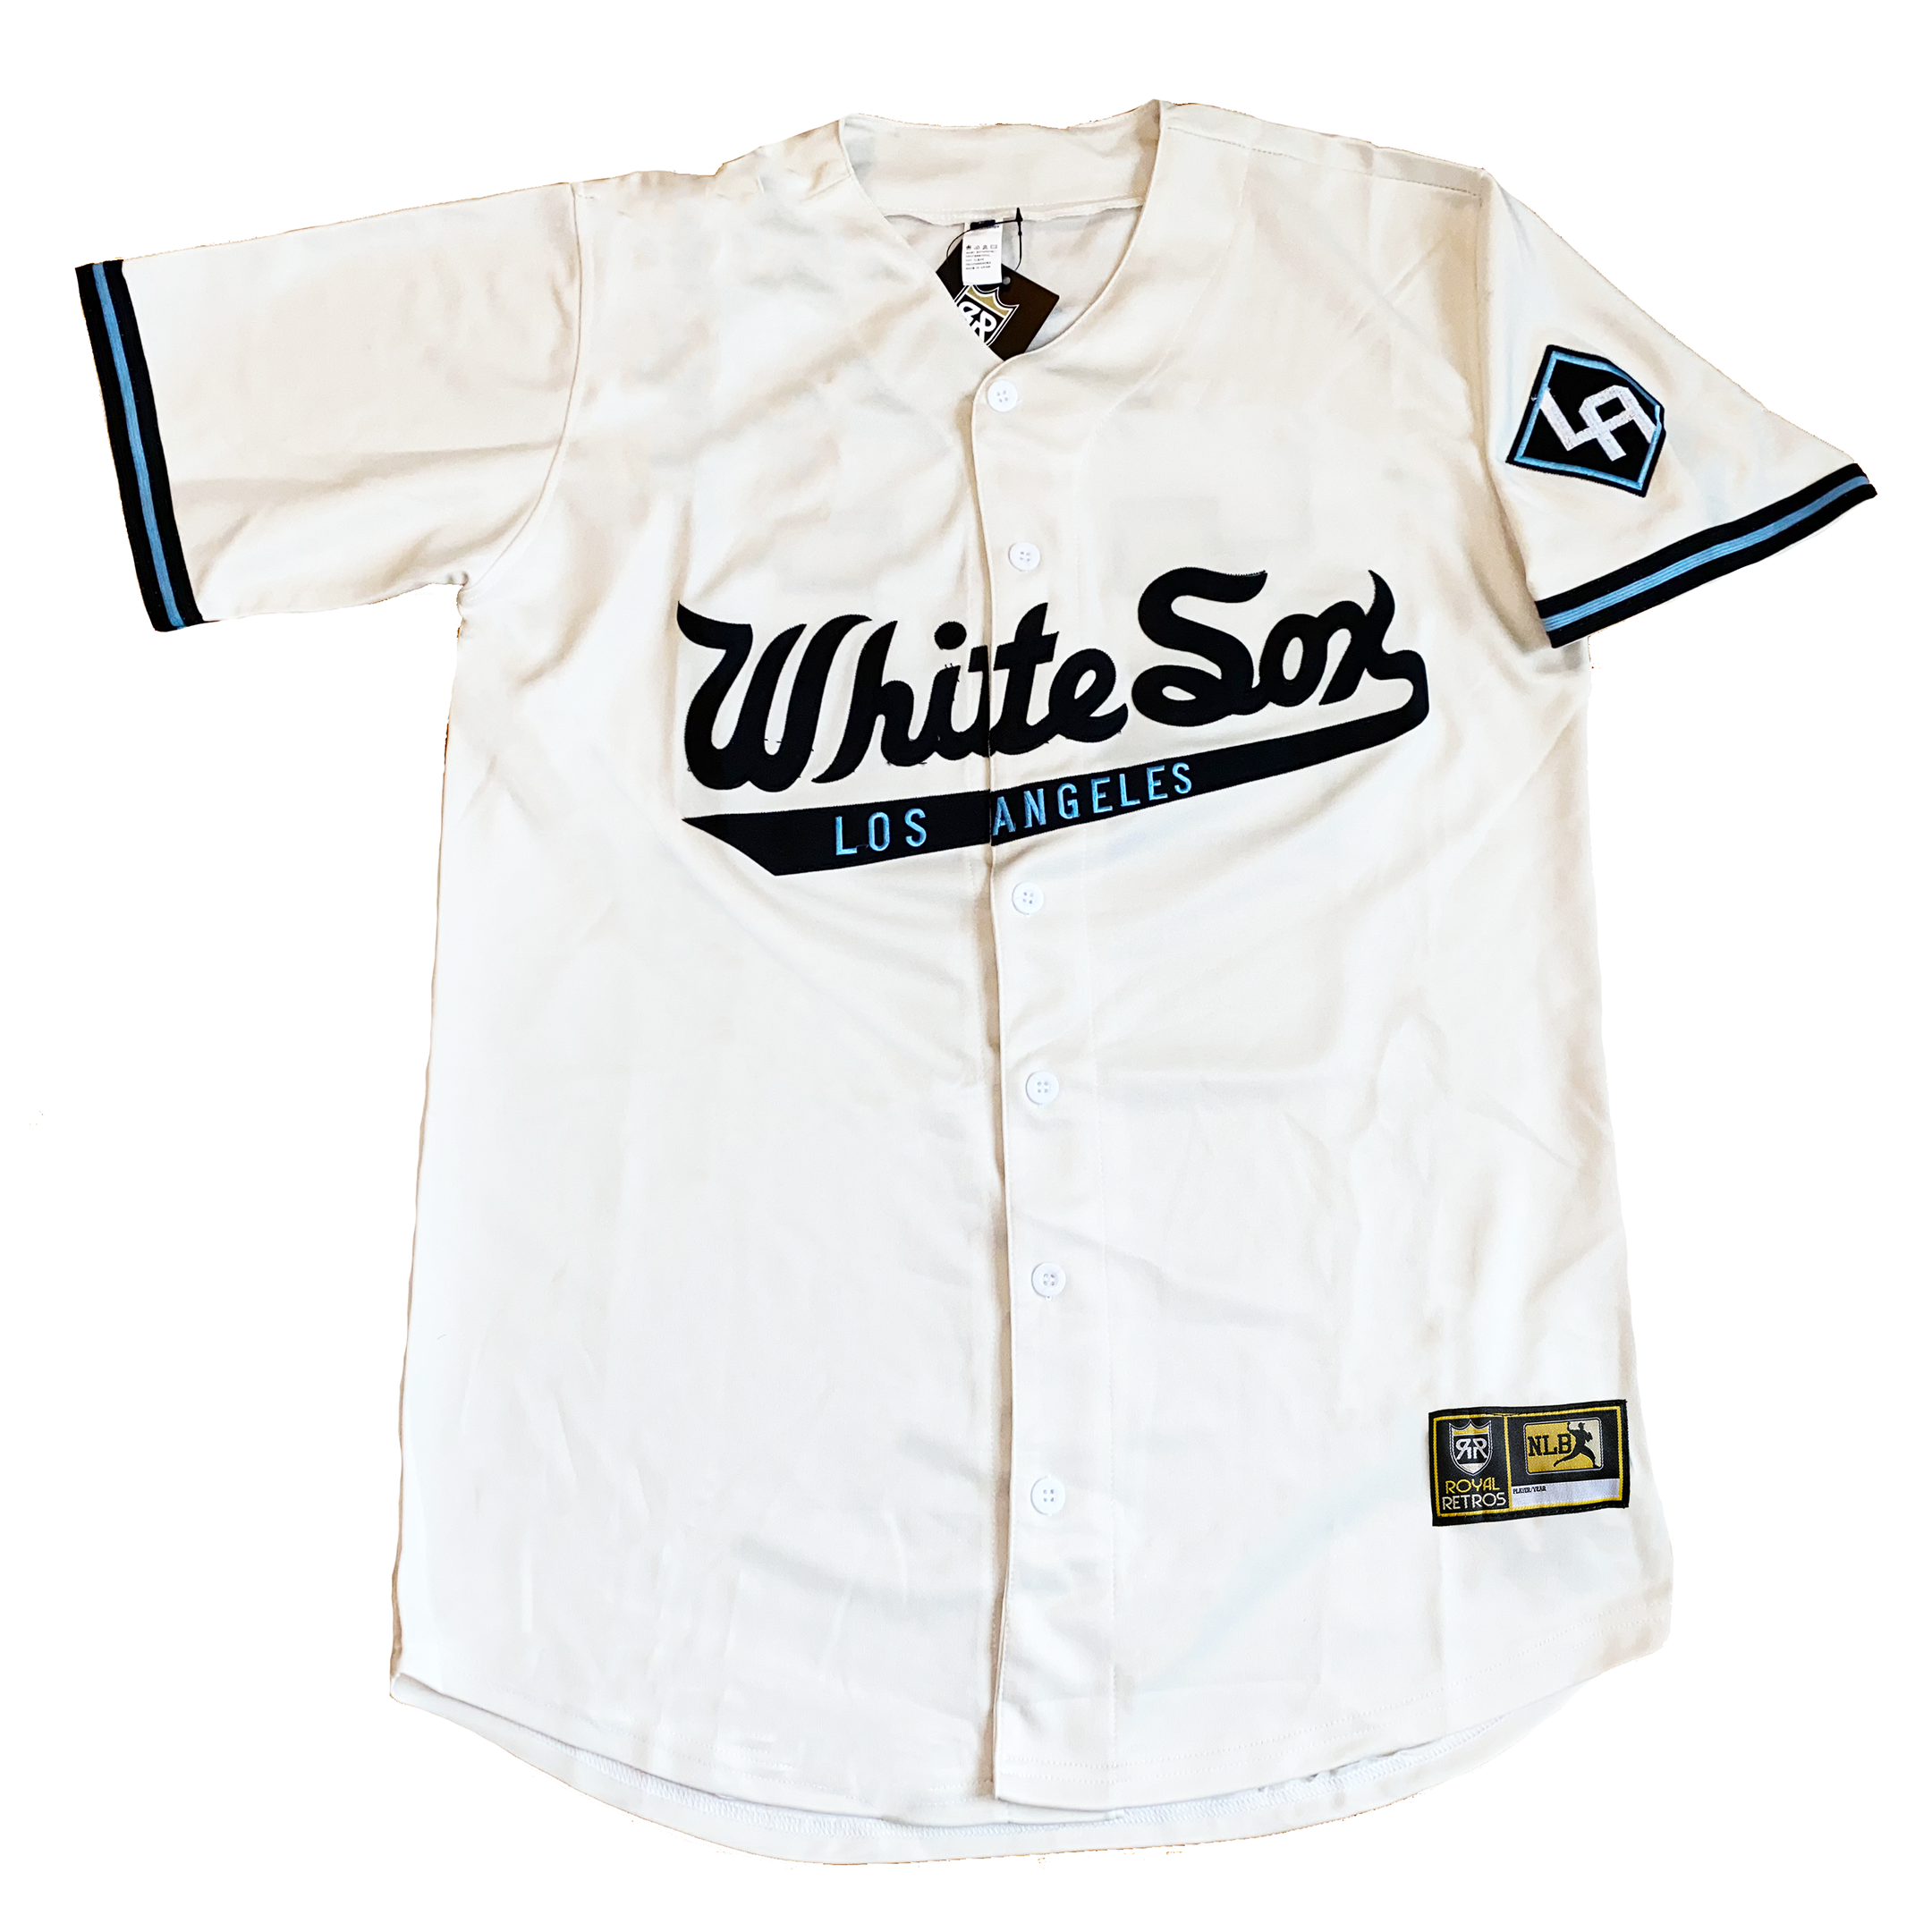 white sox uniforms